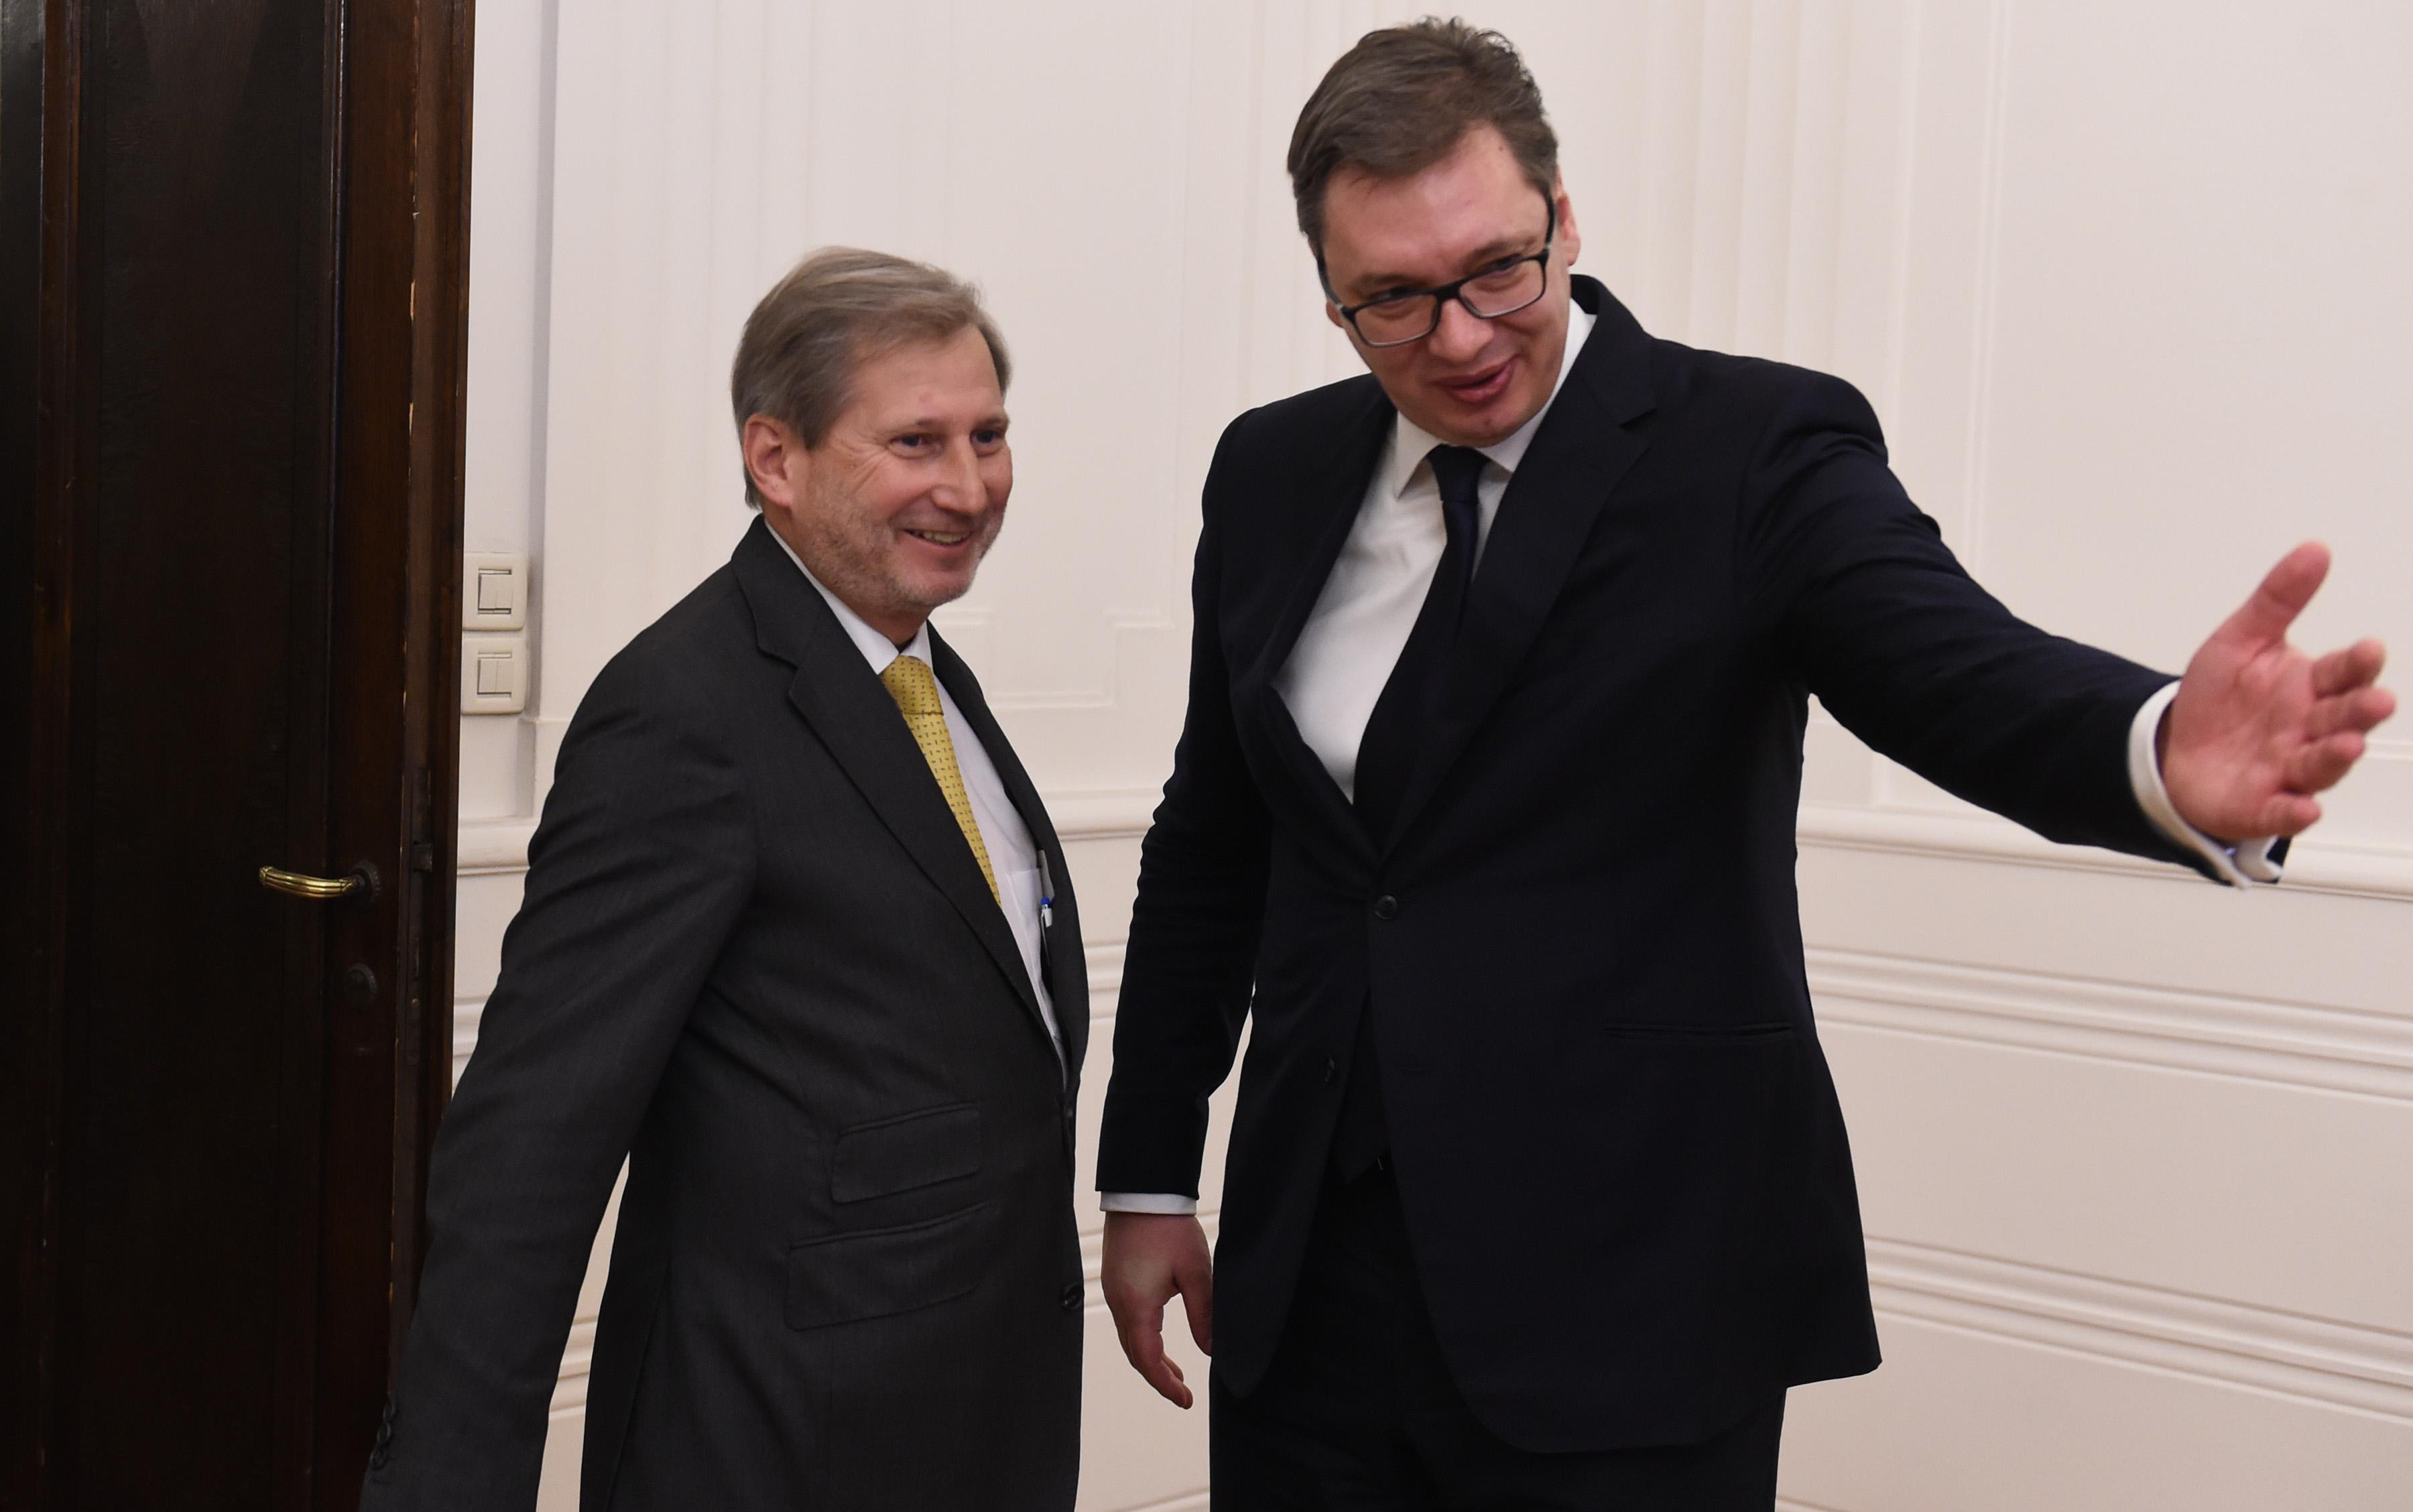 (FOTO) HAN DOPUTOVAO U BEOGRAD! Na radnoj večeri sa Aleksandrom Vučićem! 